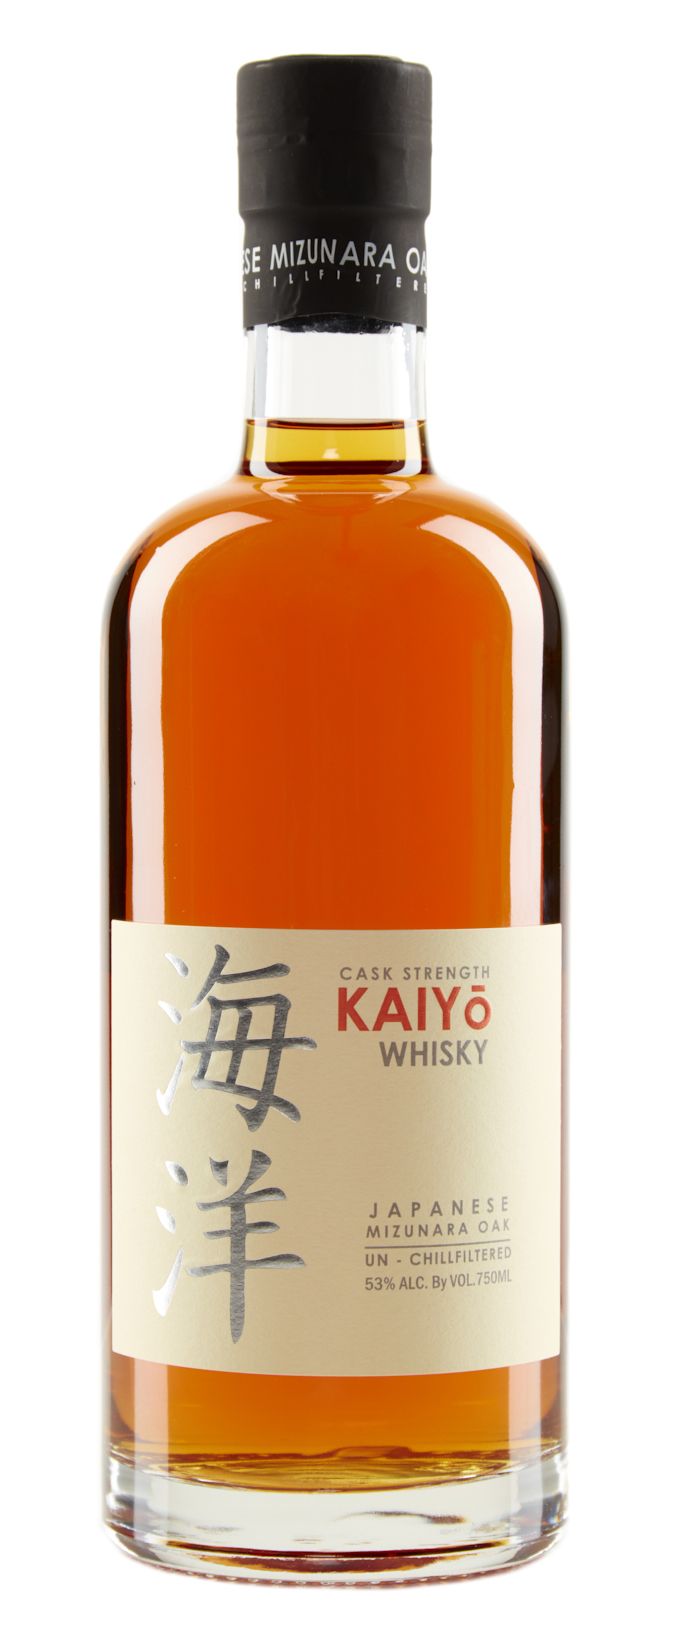 KAIYō Japanese Mizunara Oak Cask Strength Whisky